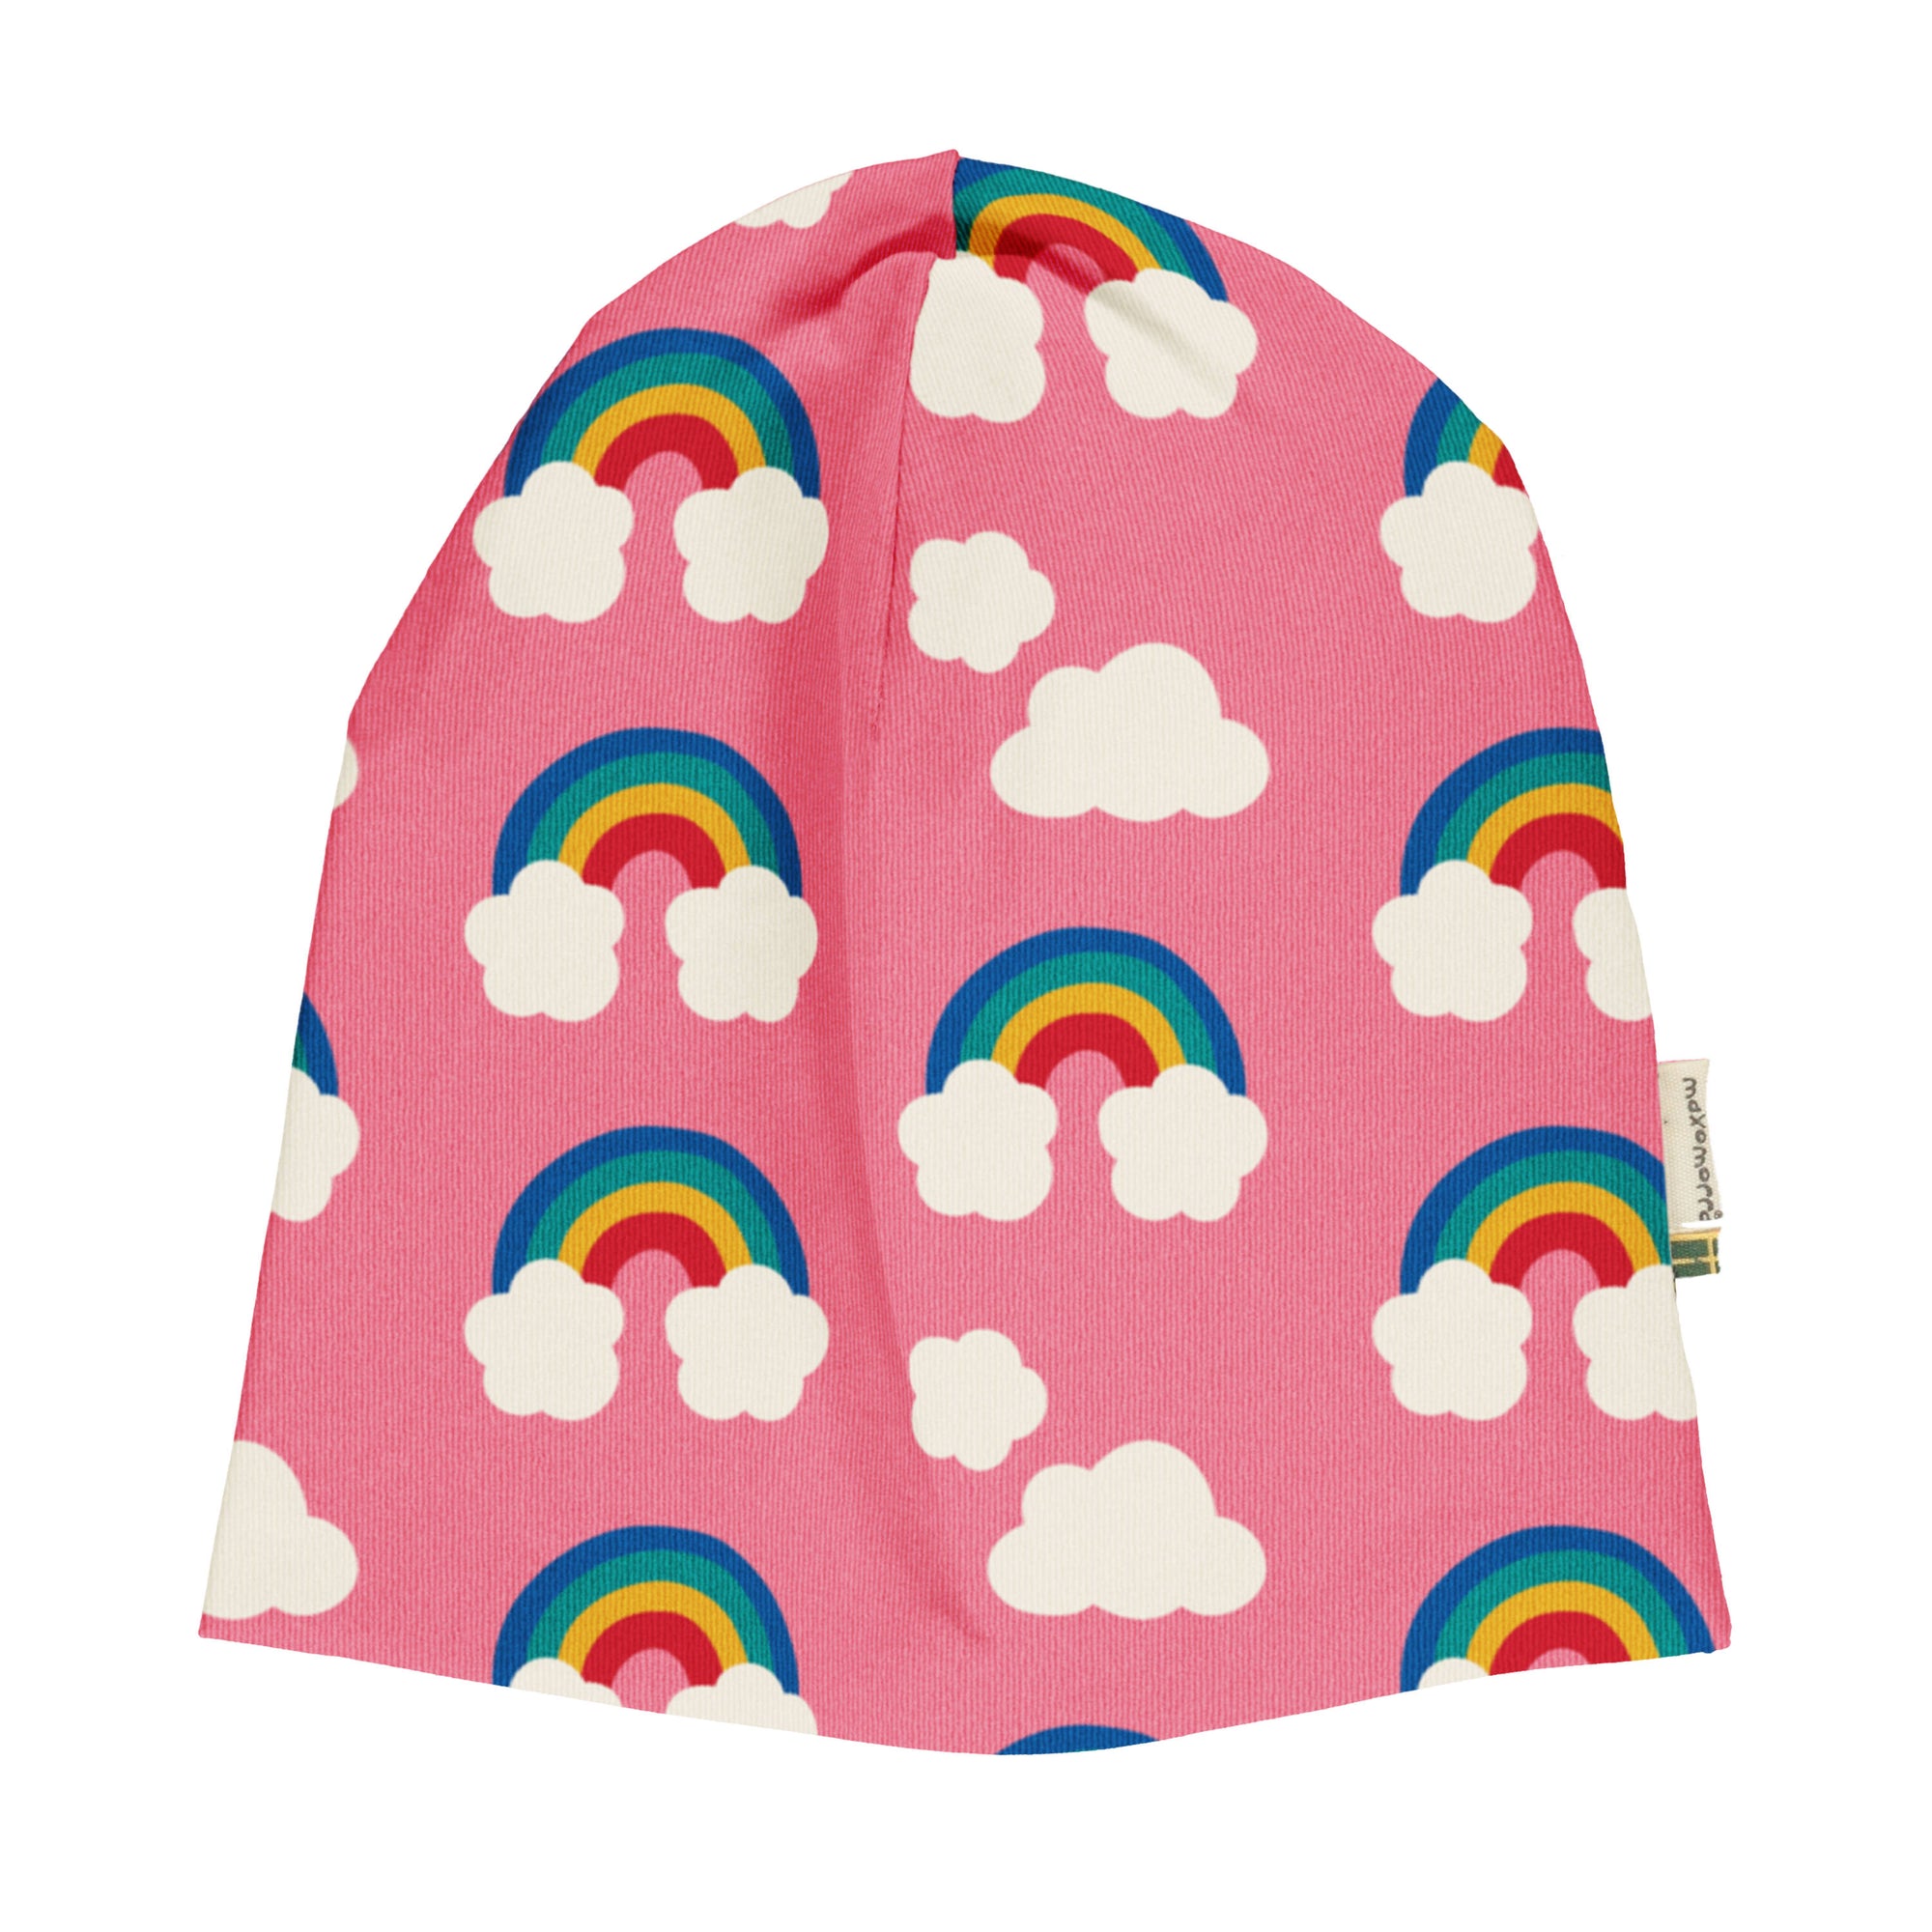 Maxomorra Pink Rainbow Hat Dxa2306 Clothing 48/50 CM / Pink,52/54 CM / Pink,56/58 CM / Pink